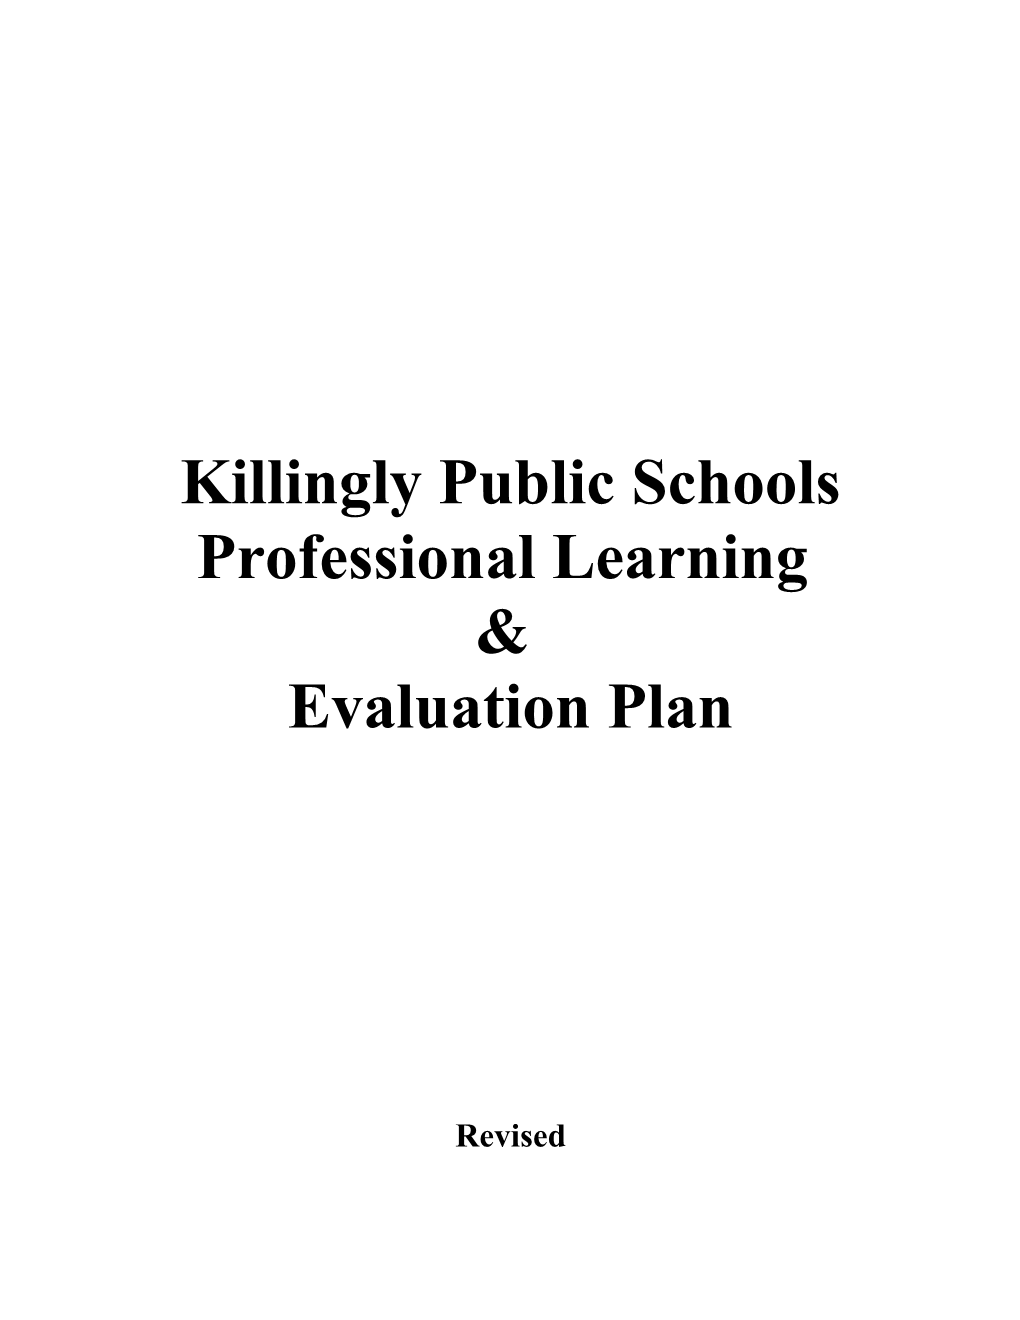 Killingly Public Schools Professional Learning